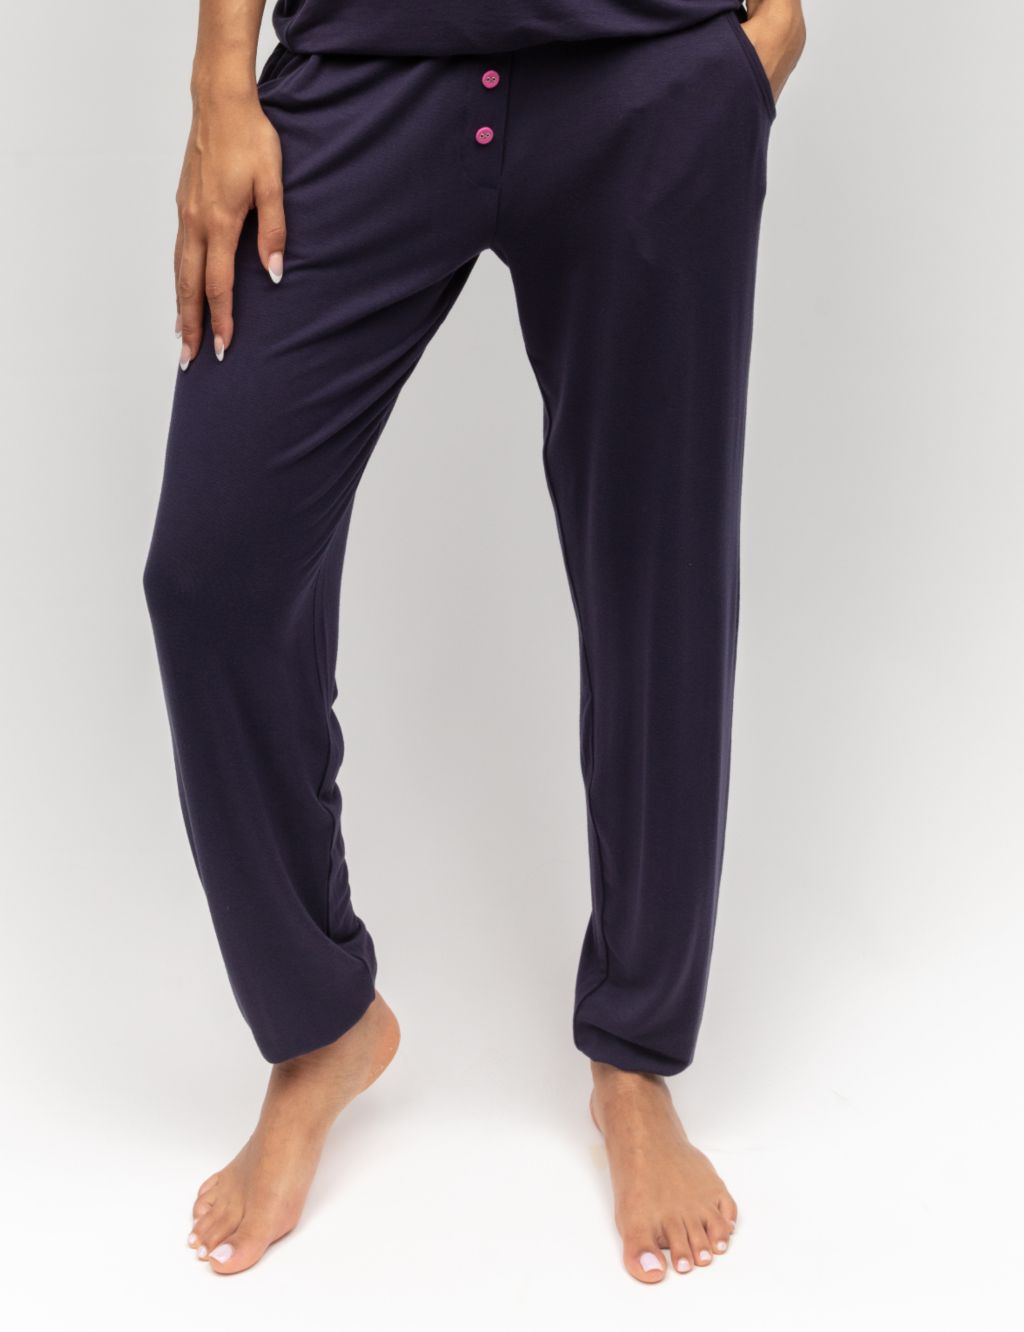 Womens/Ladies Fleece Lounge Pants Pyjama Bottoms Pyjamas Size 8-22